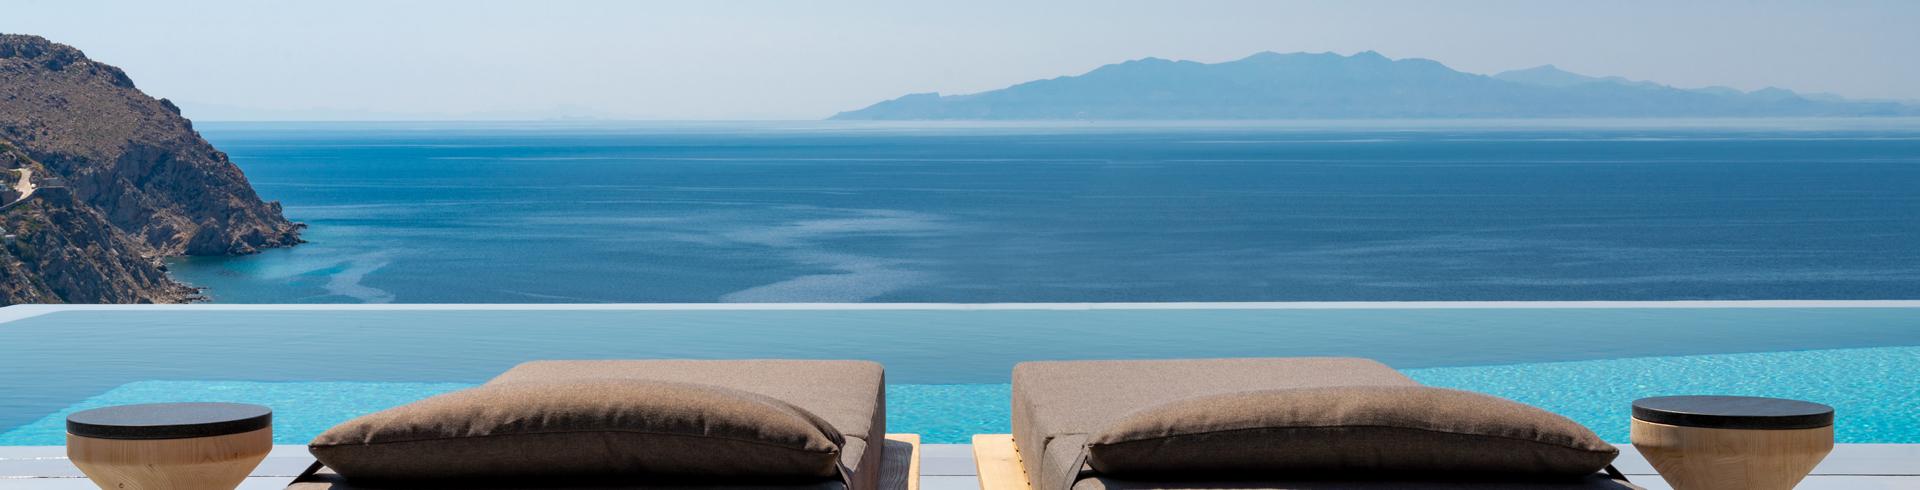 Ferienhaus Luxusvilla mieten griechenland privater pool meerblick sandstrand finest greek villas